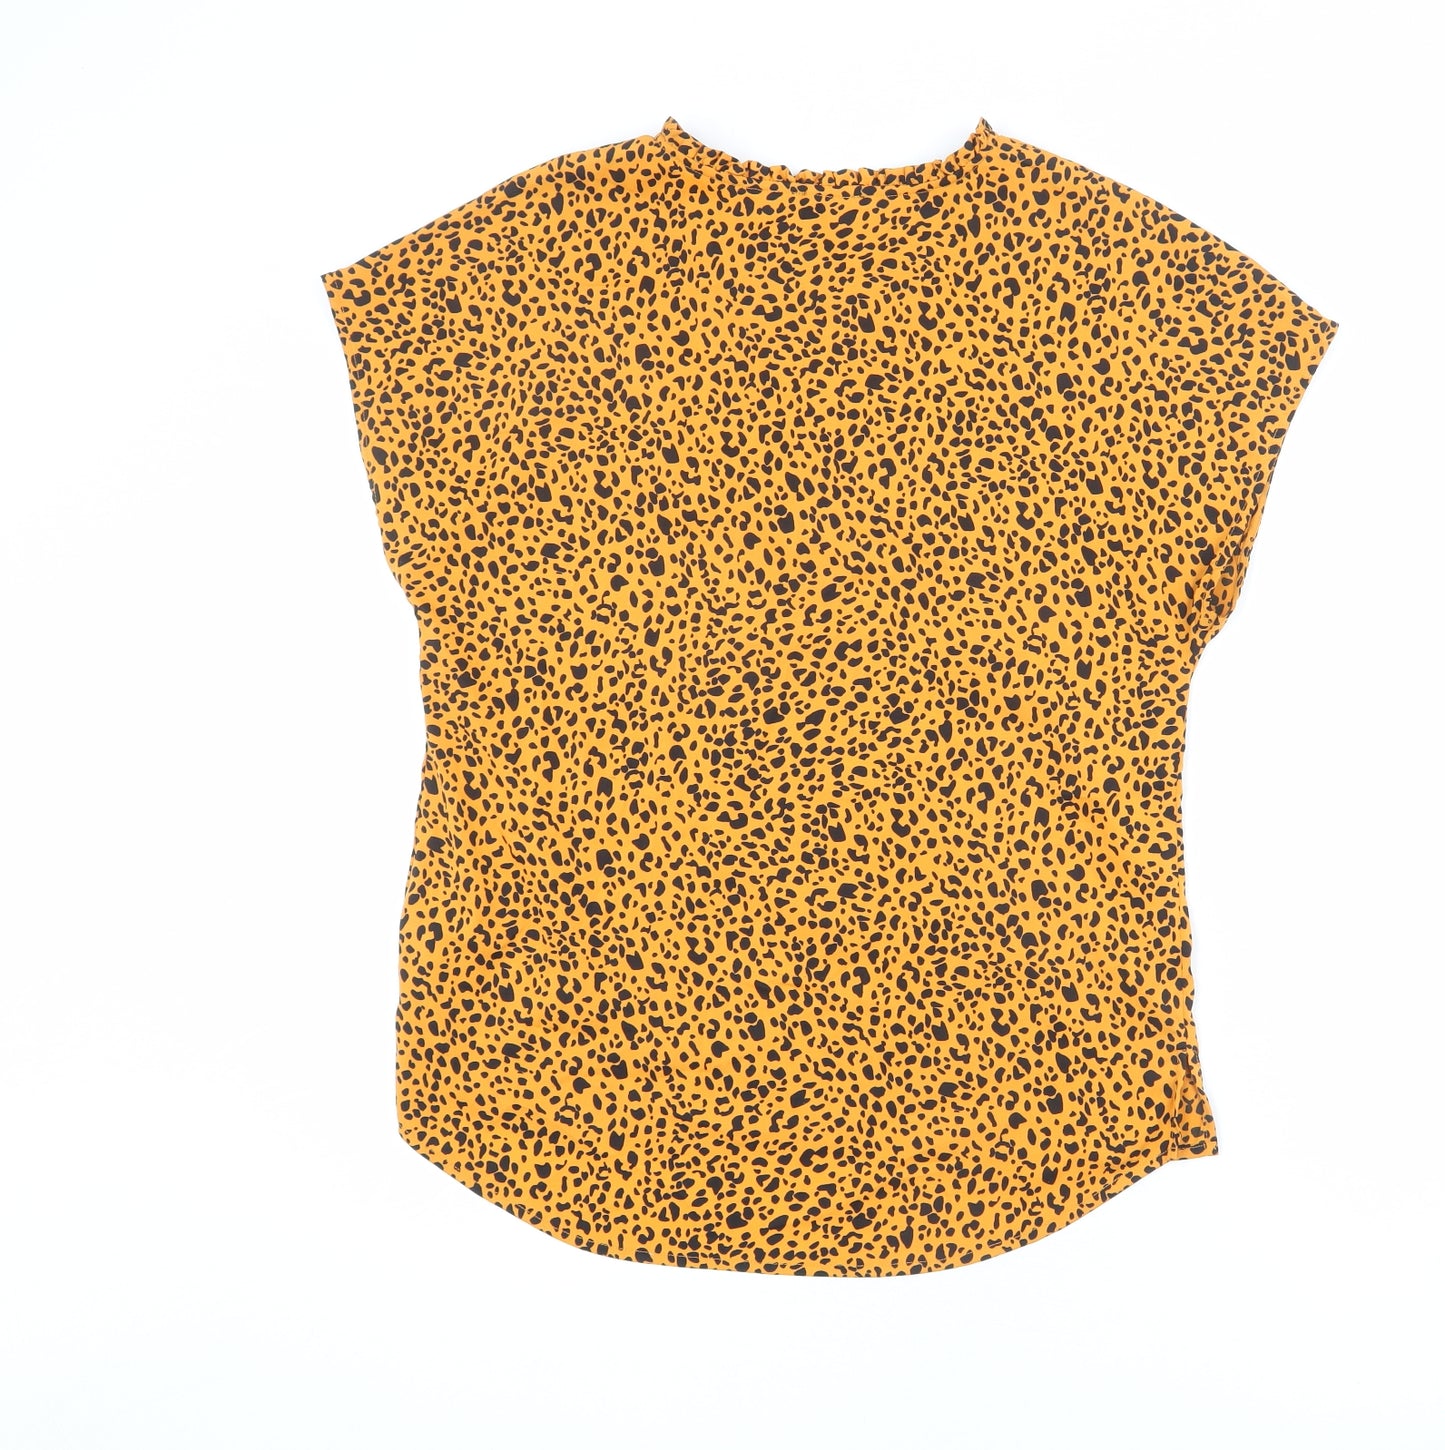 M&Co Womens Orange Animal Print Polyester Basic Blouse Size 12 V-Neck - Leopard Print